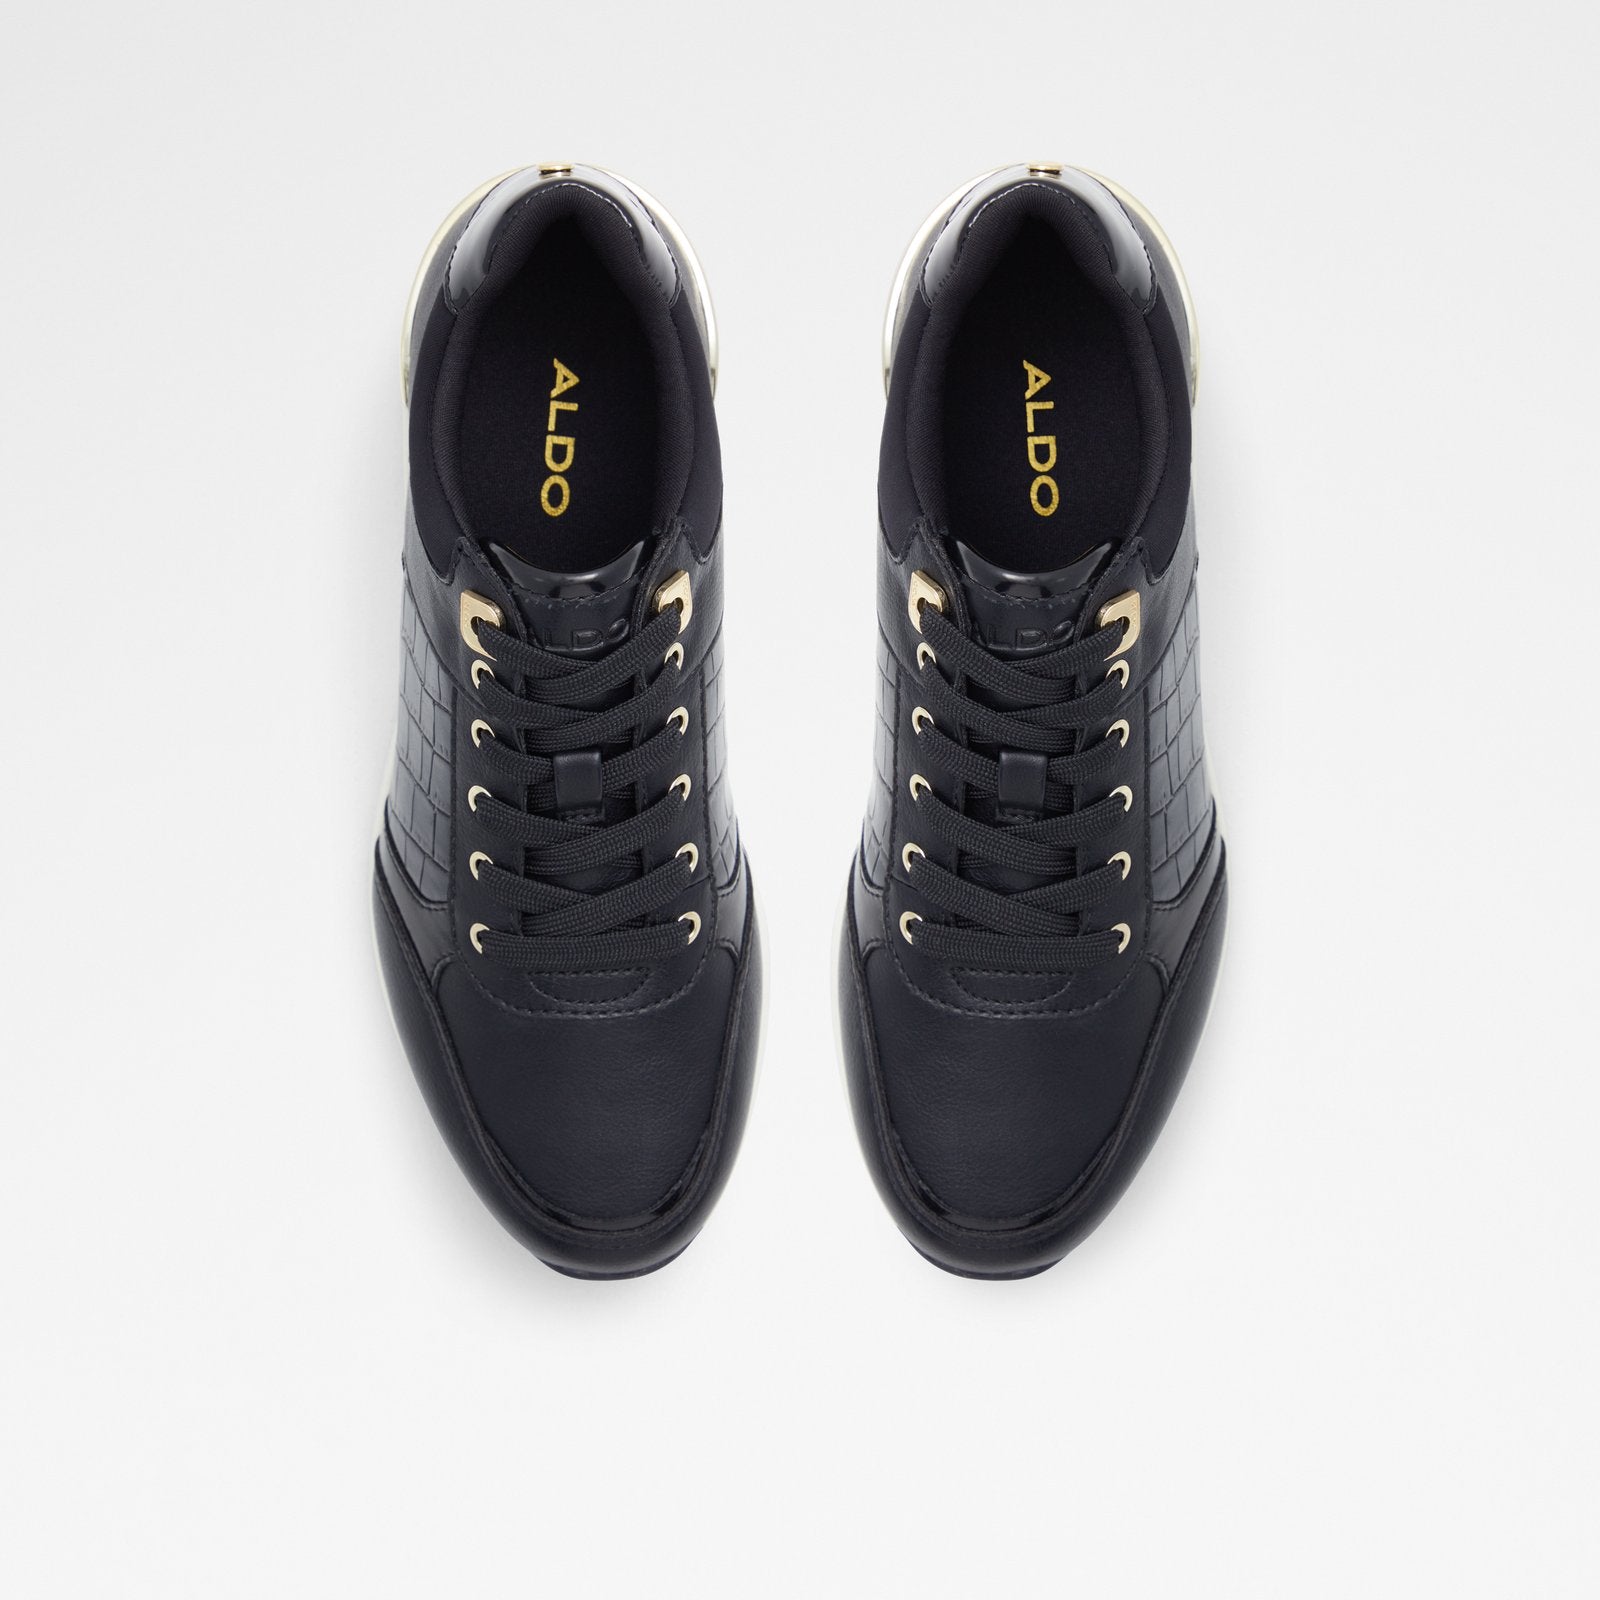 Iconistep / Sneakers Women Shoes - Black - ALDO KSA